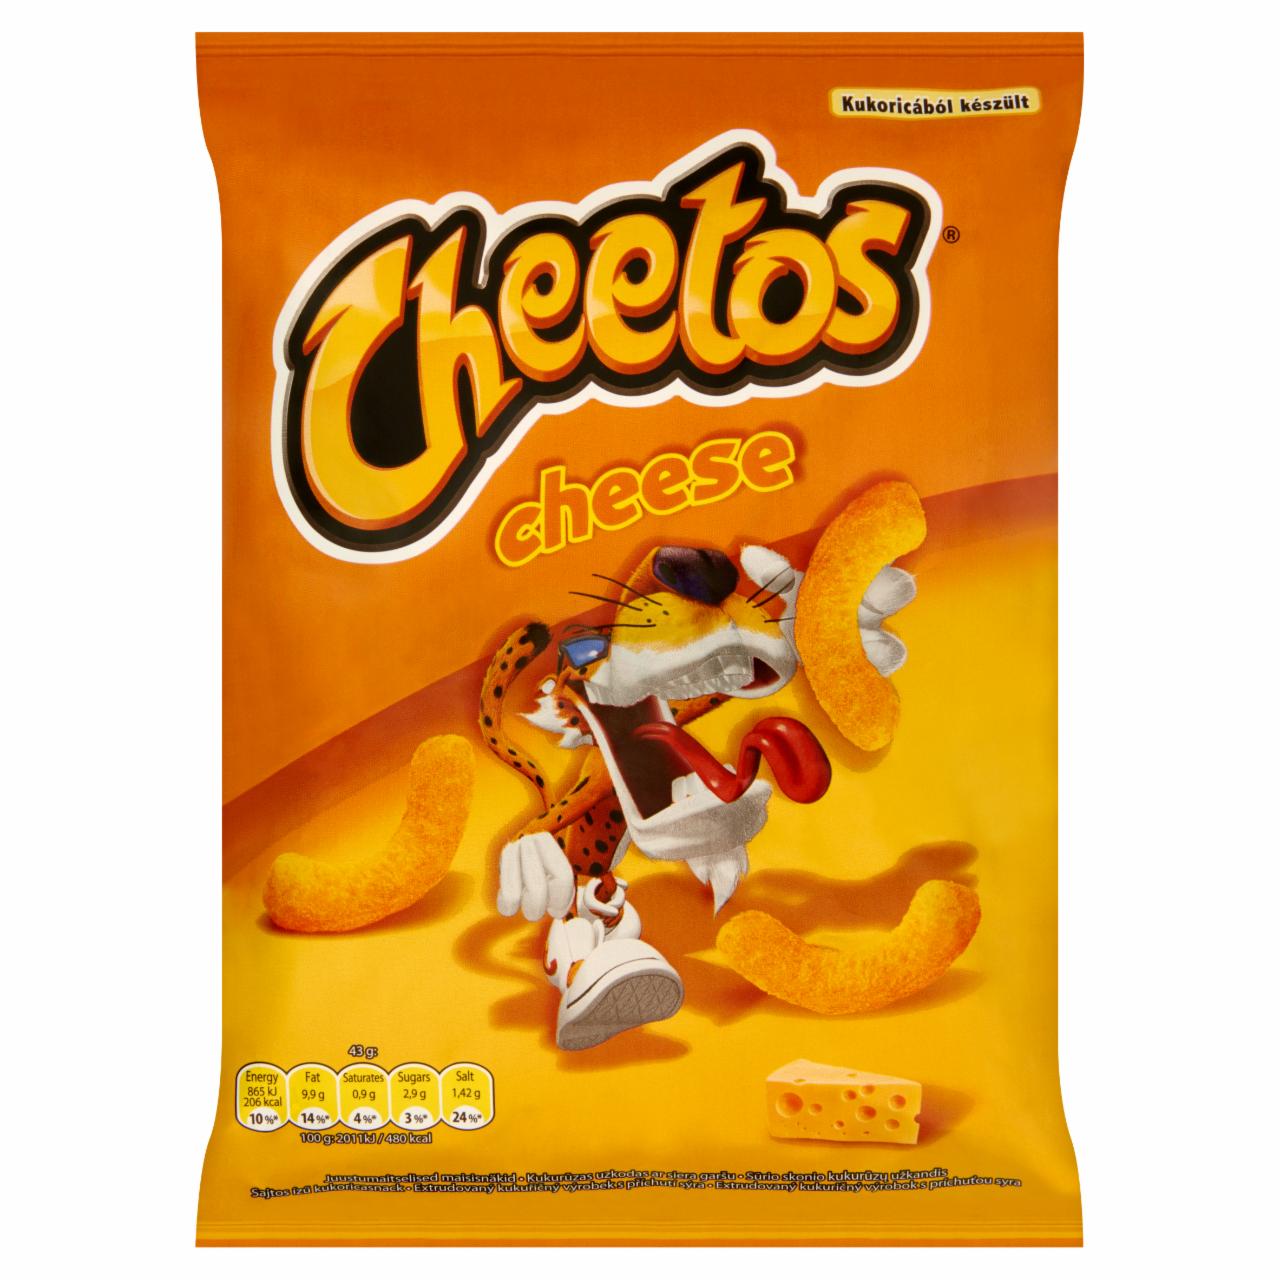 Képek - Cheetos sajtos ízű kukoricasnack 43 g